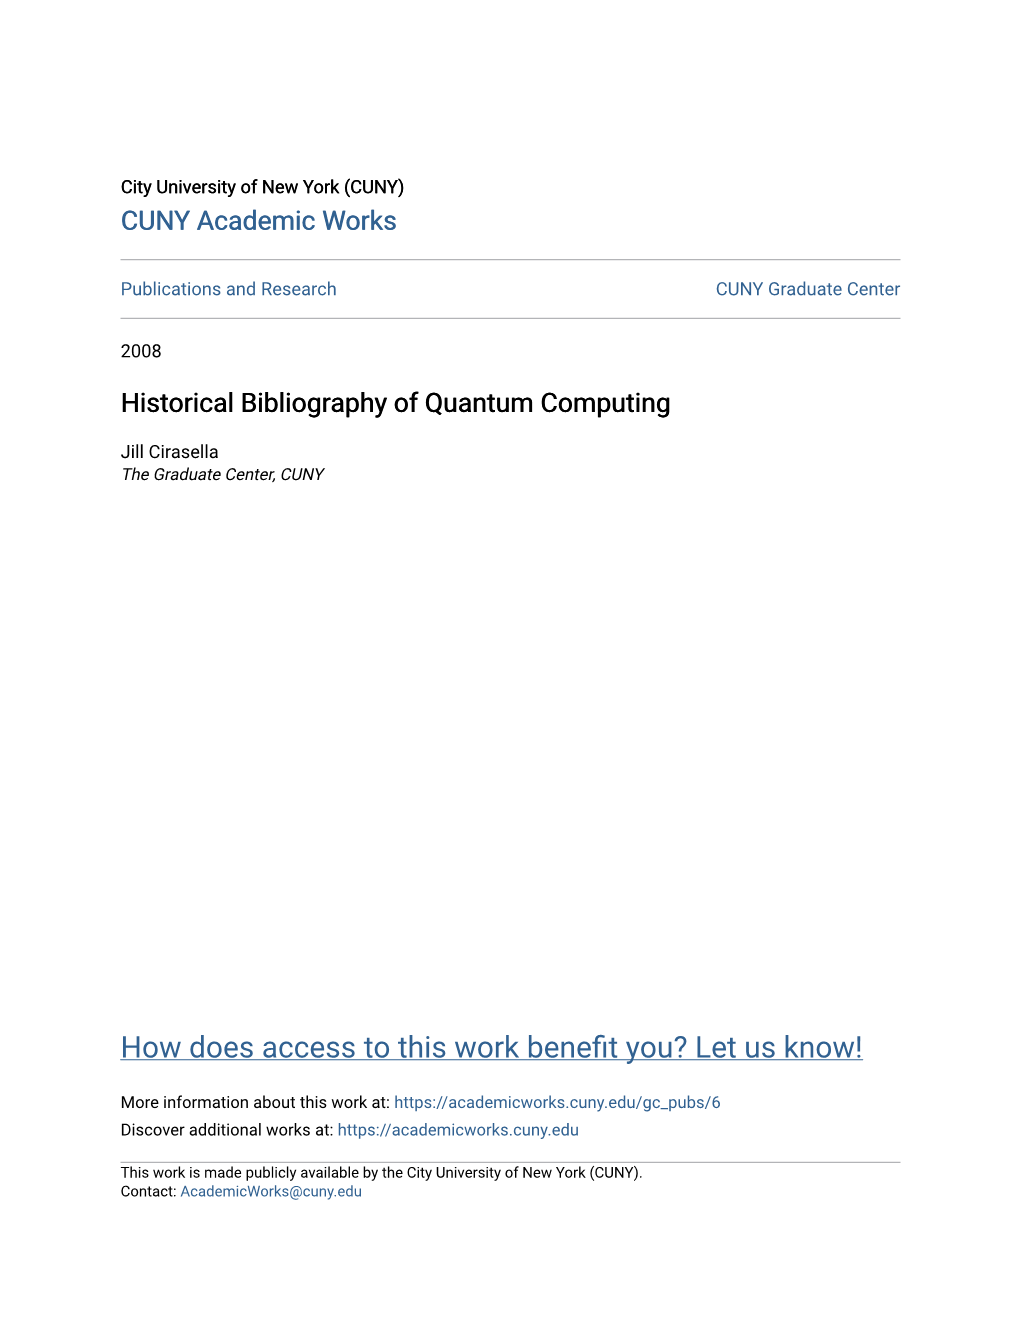 Historical Bibliography of Quantum Computing